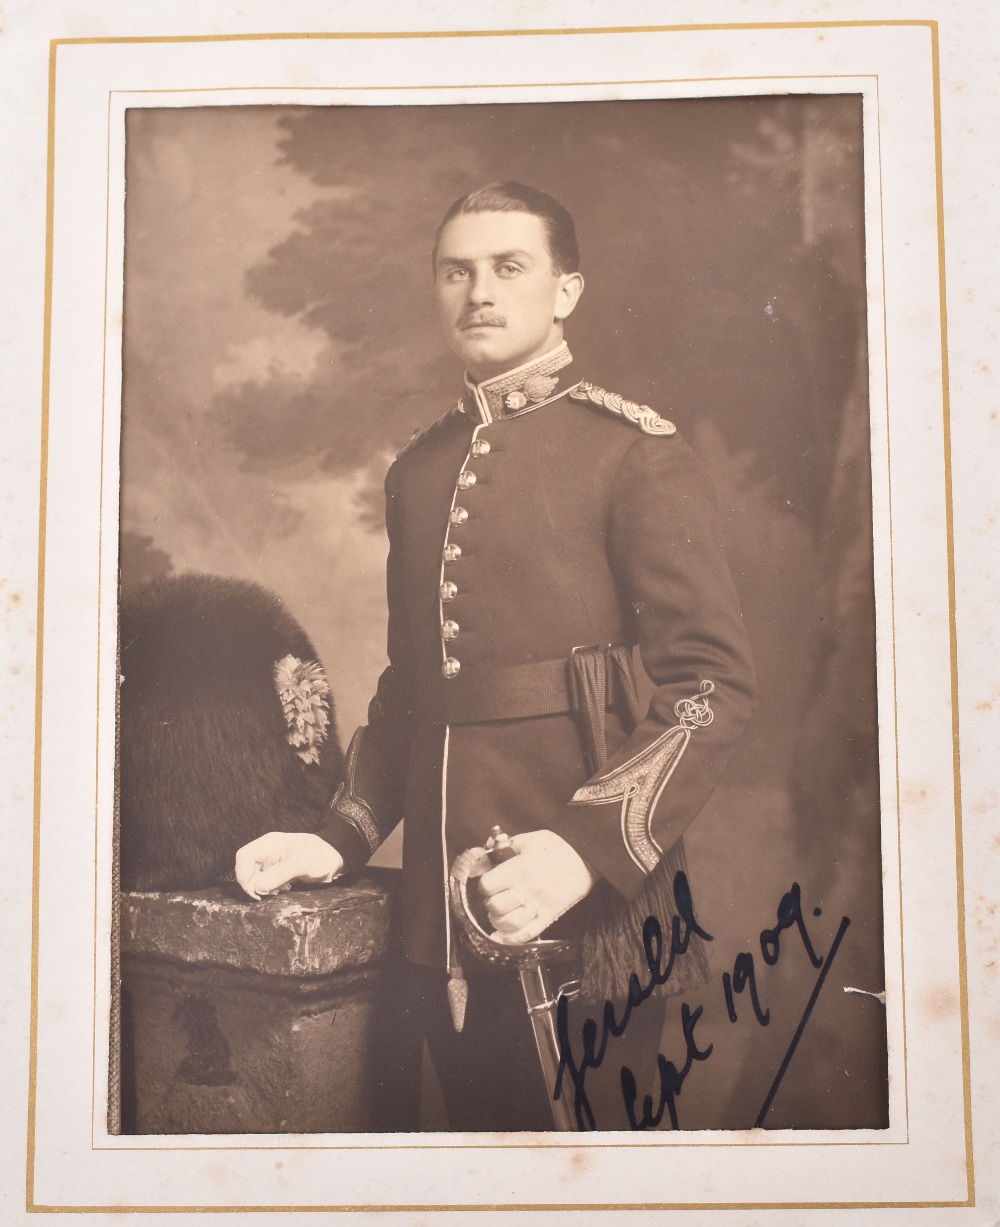 Signed Photograph of Victoria Cross Winner Captain Gerald O'Sullivan Royal Inniskilling Fusiliers